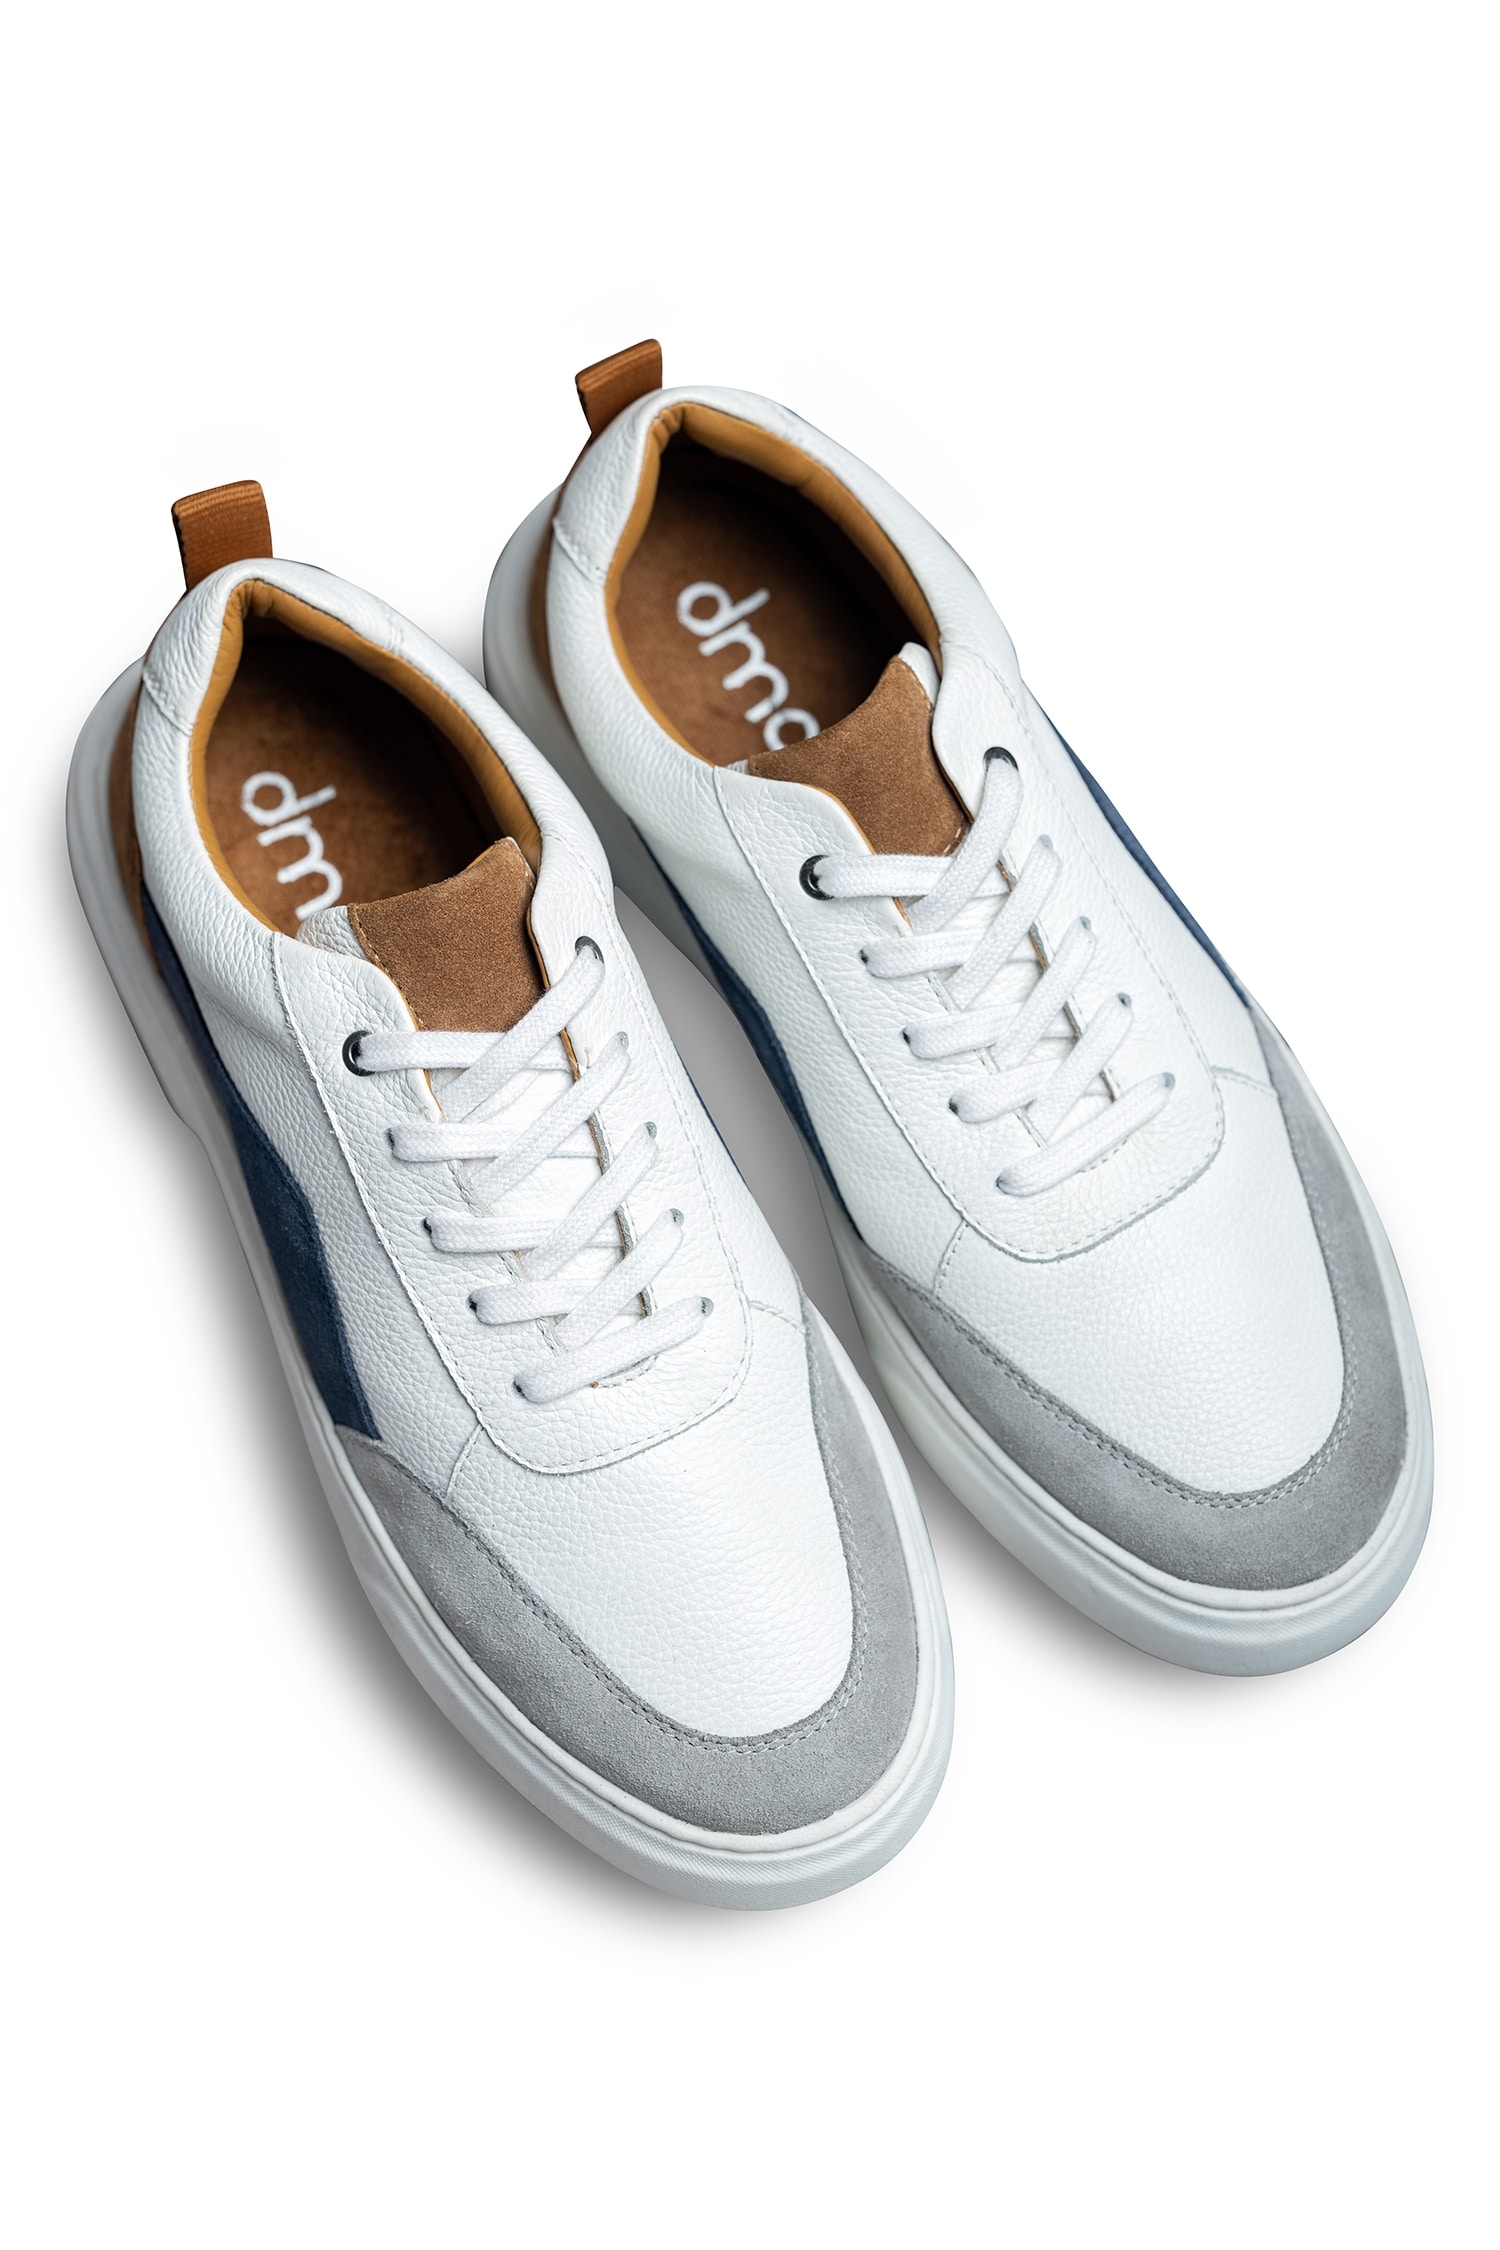 Dmodot White Upper Material Freddo Leather Sneakers